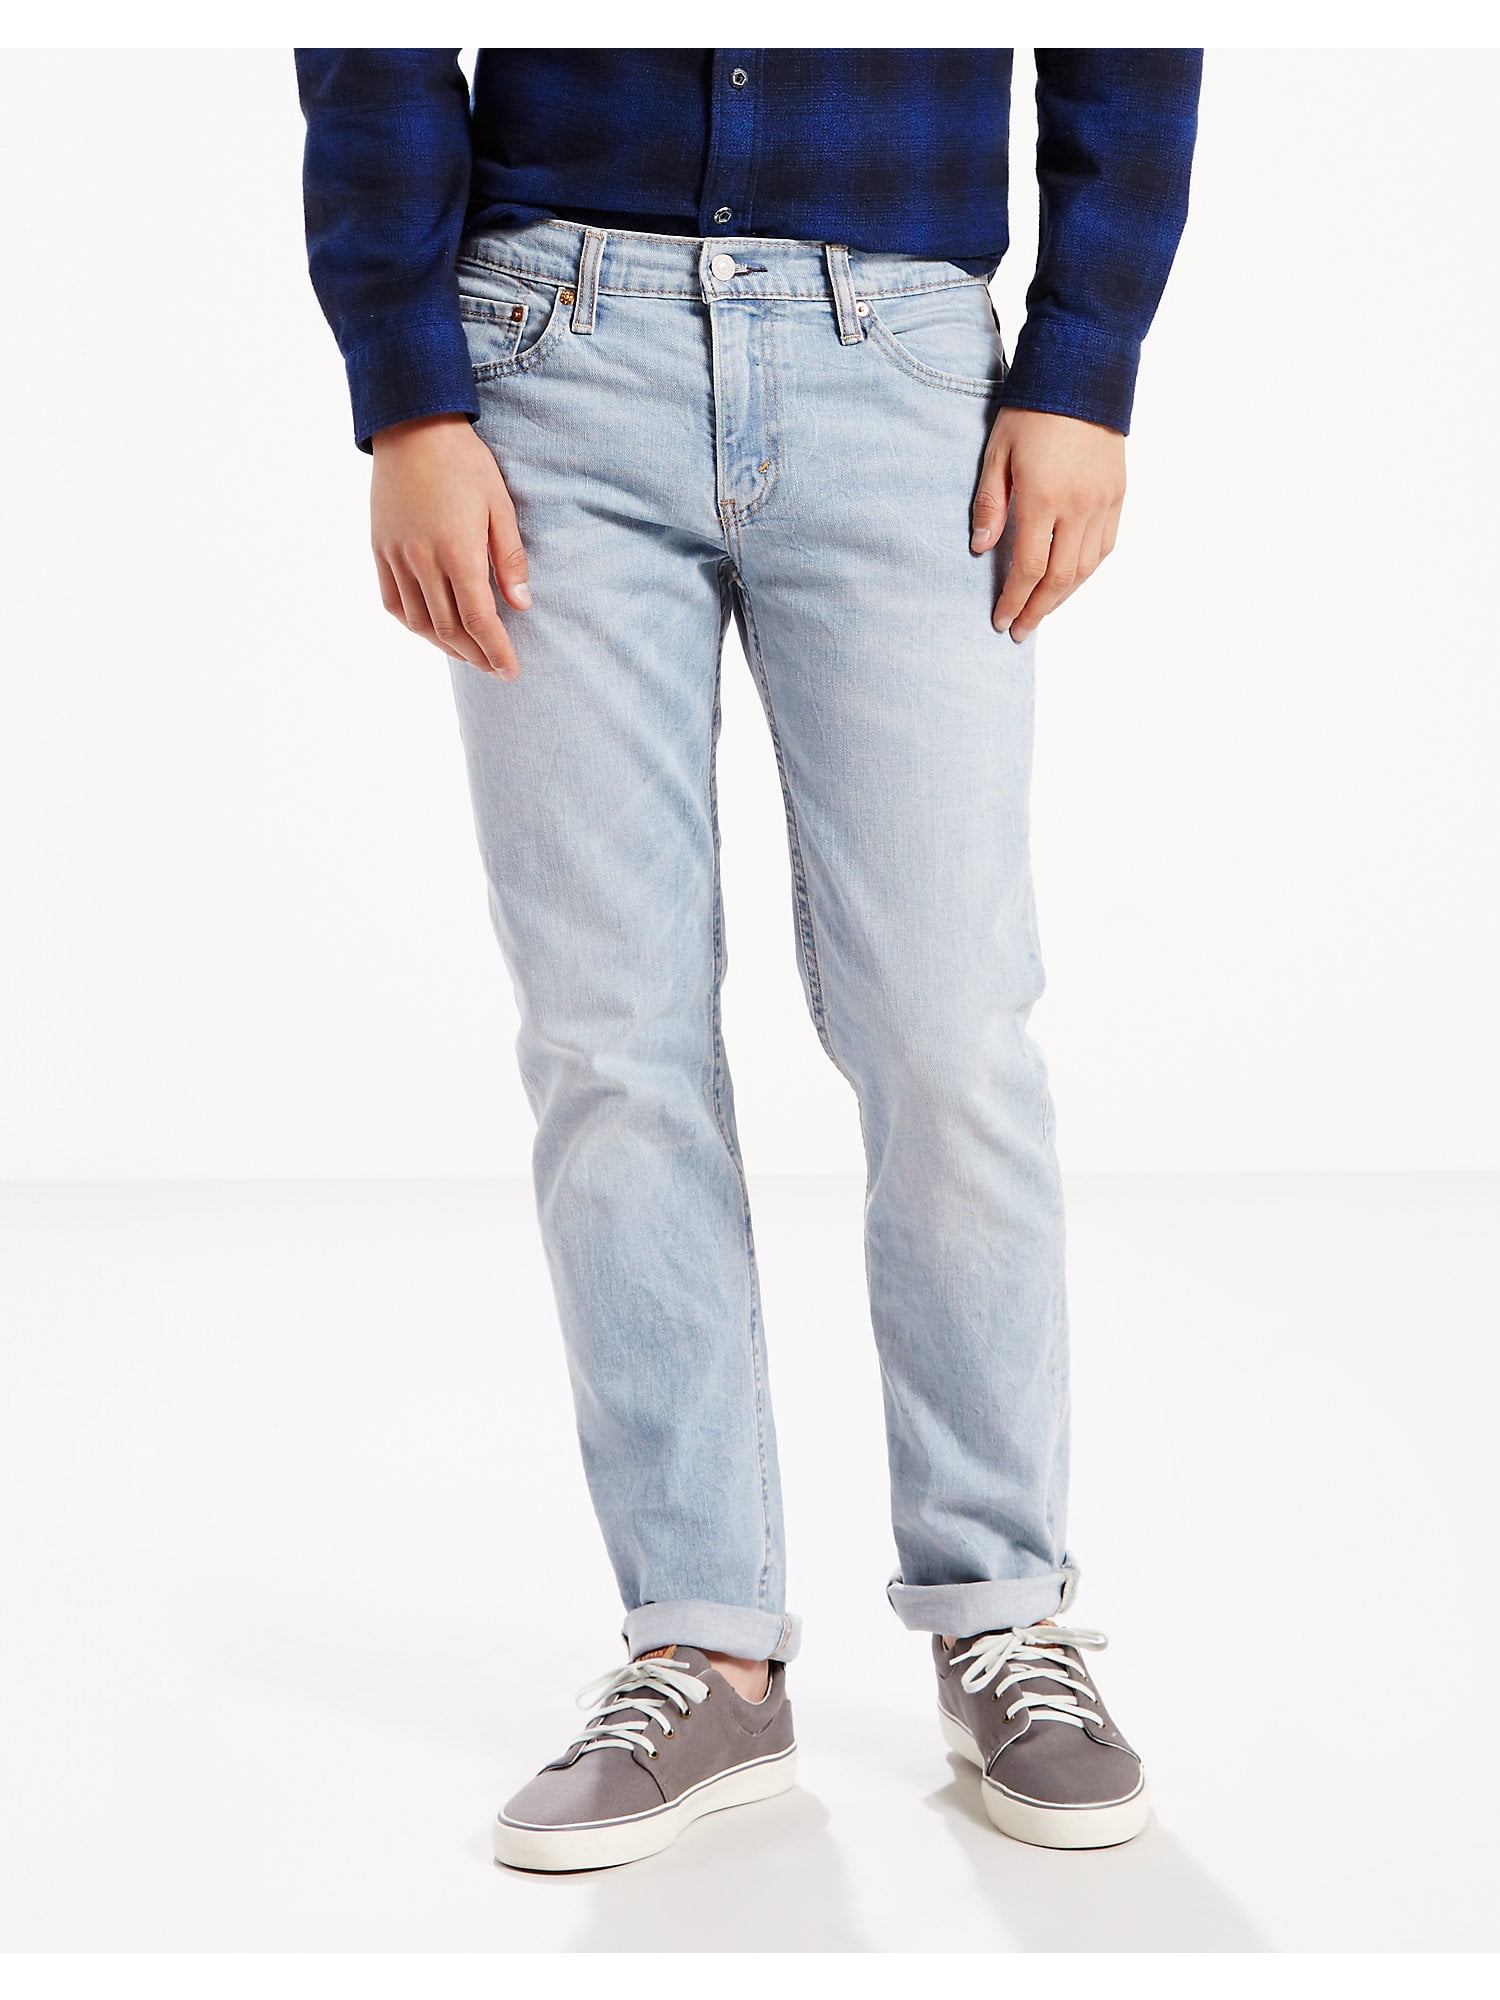 Levi's Men's 511 Slim Fit Stretch Jeans 